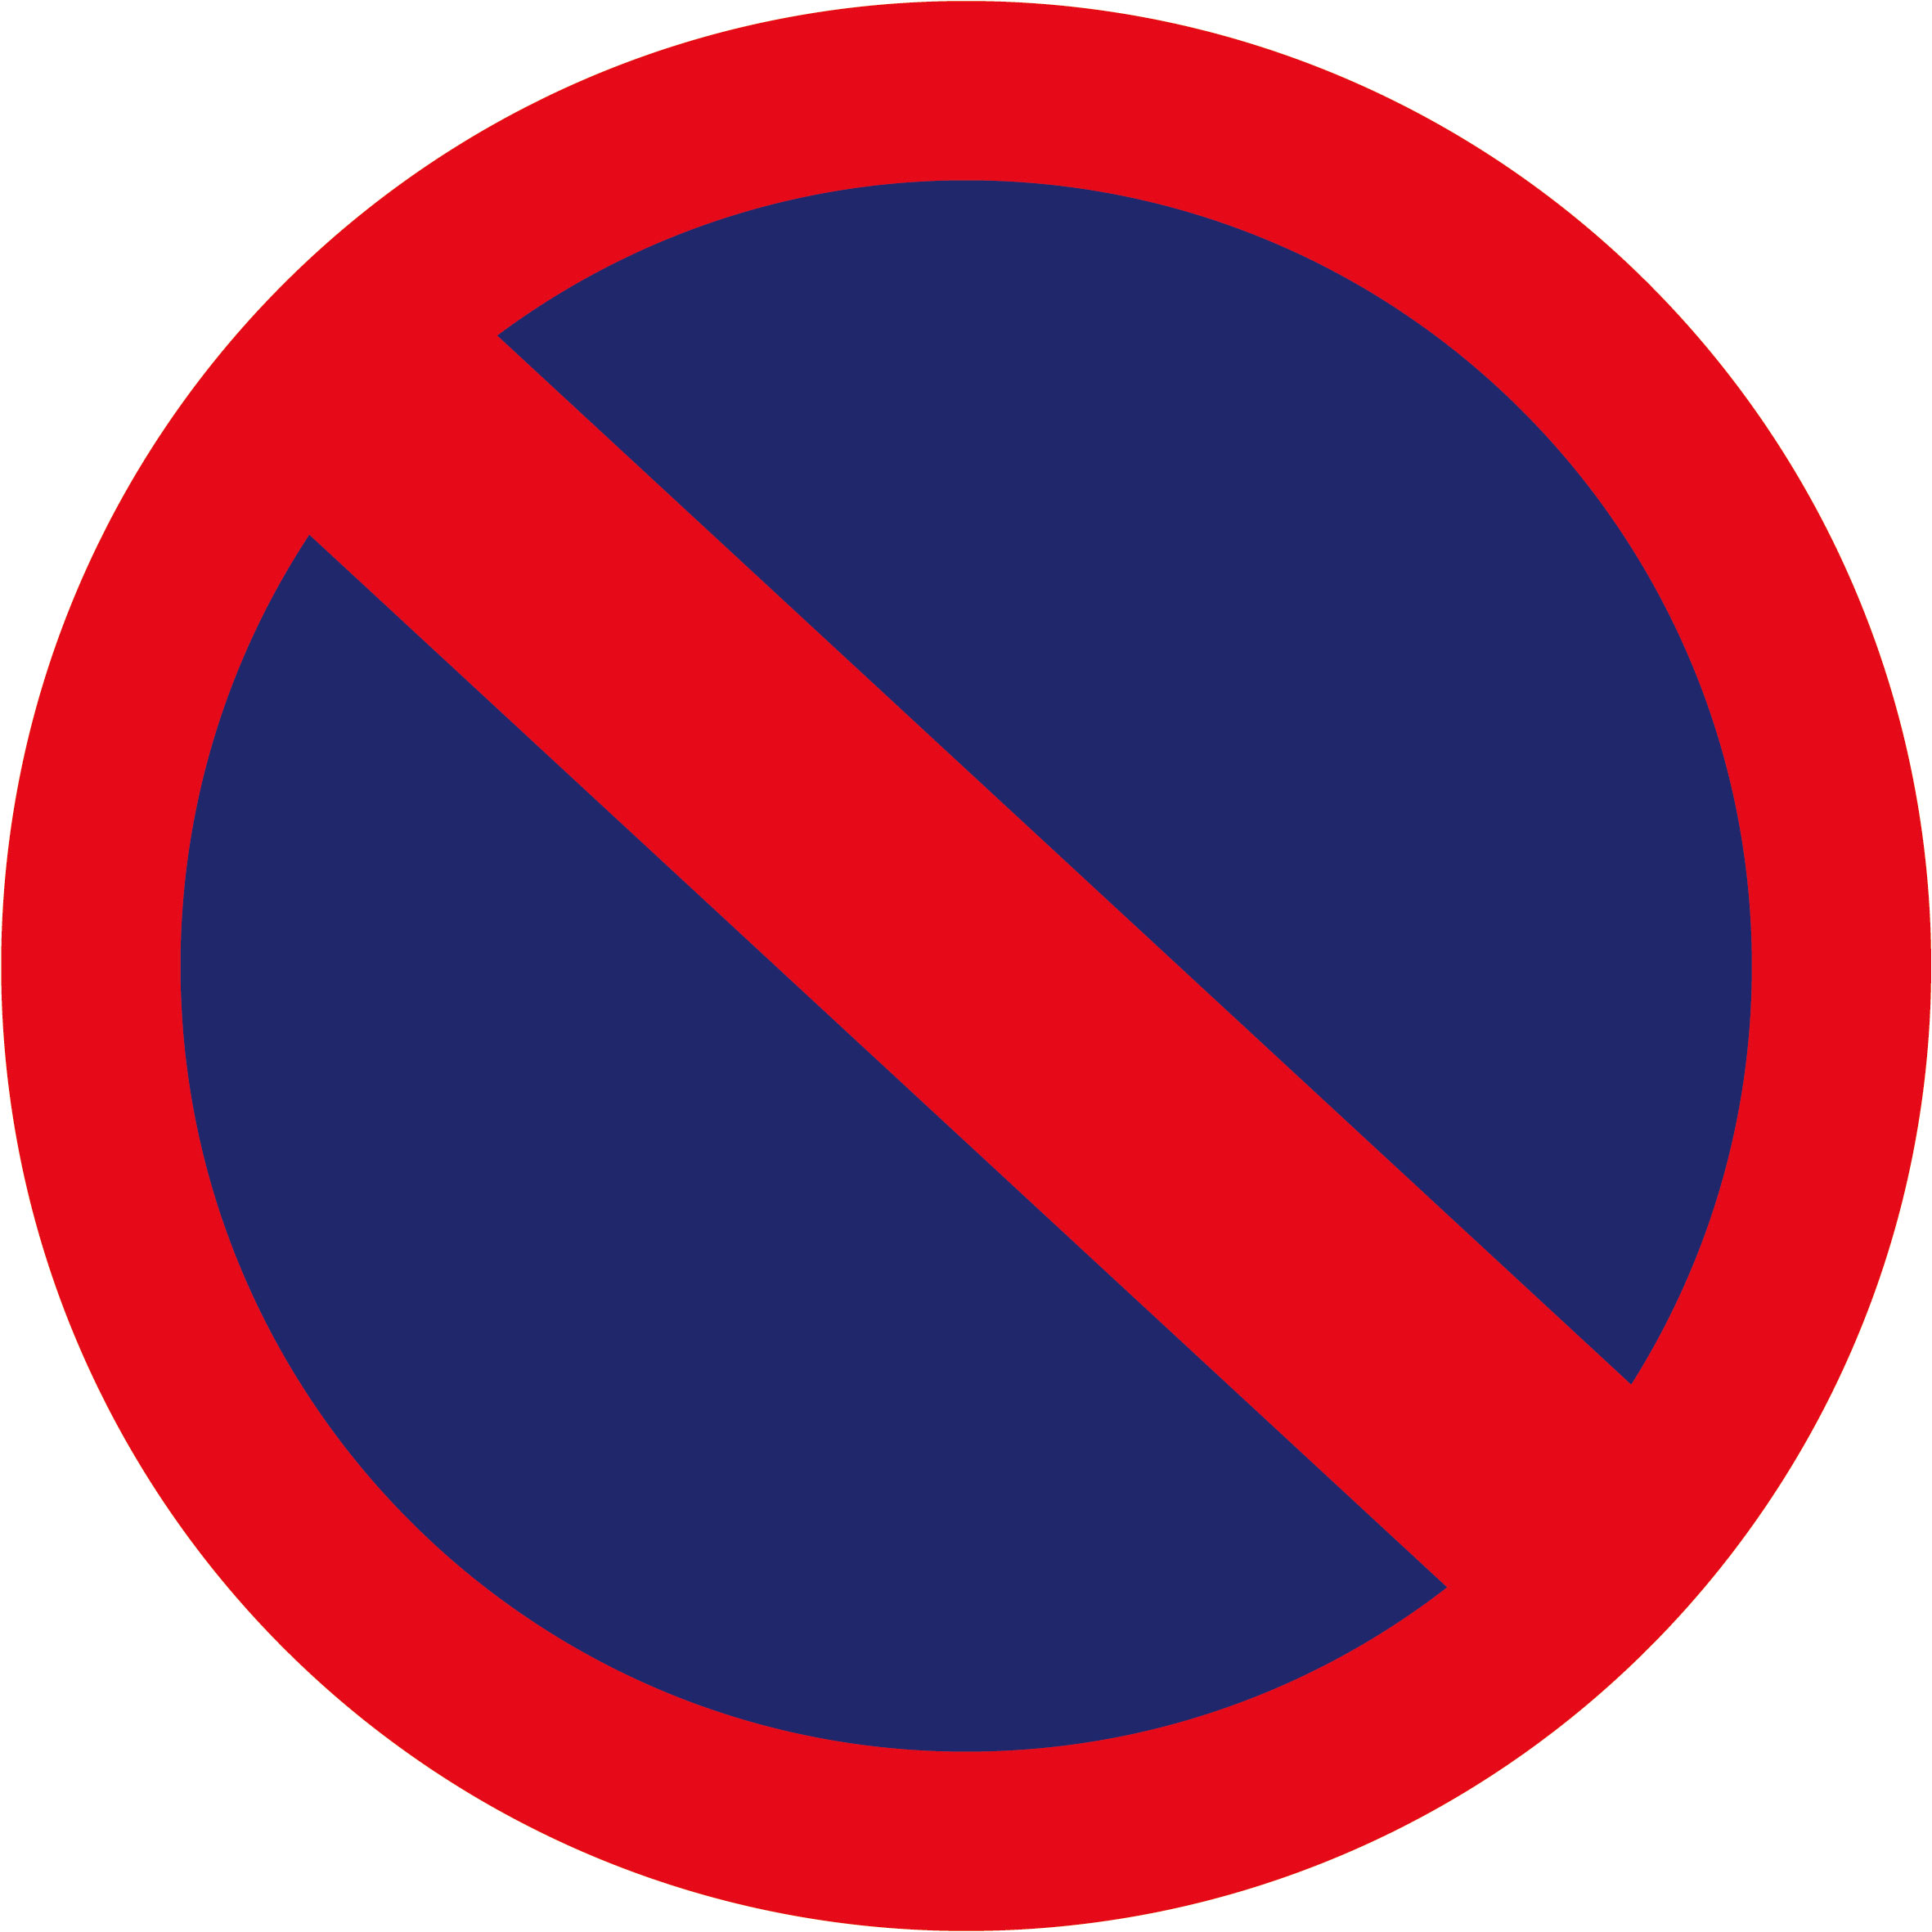 Solvent Or UV Flat Road Warning Traffic Signs And Symbols Printing ...